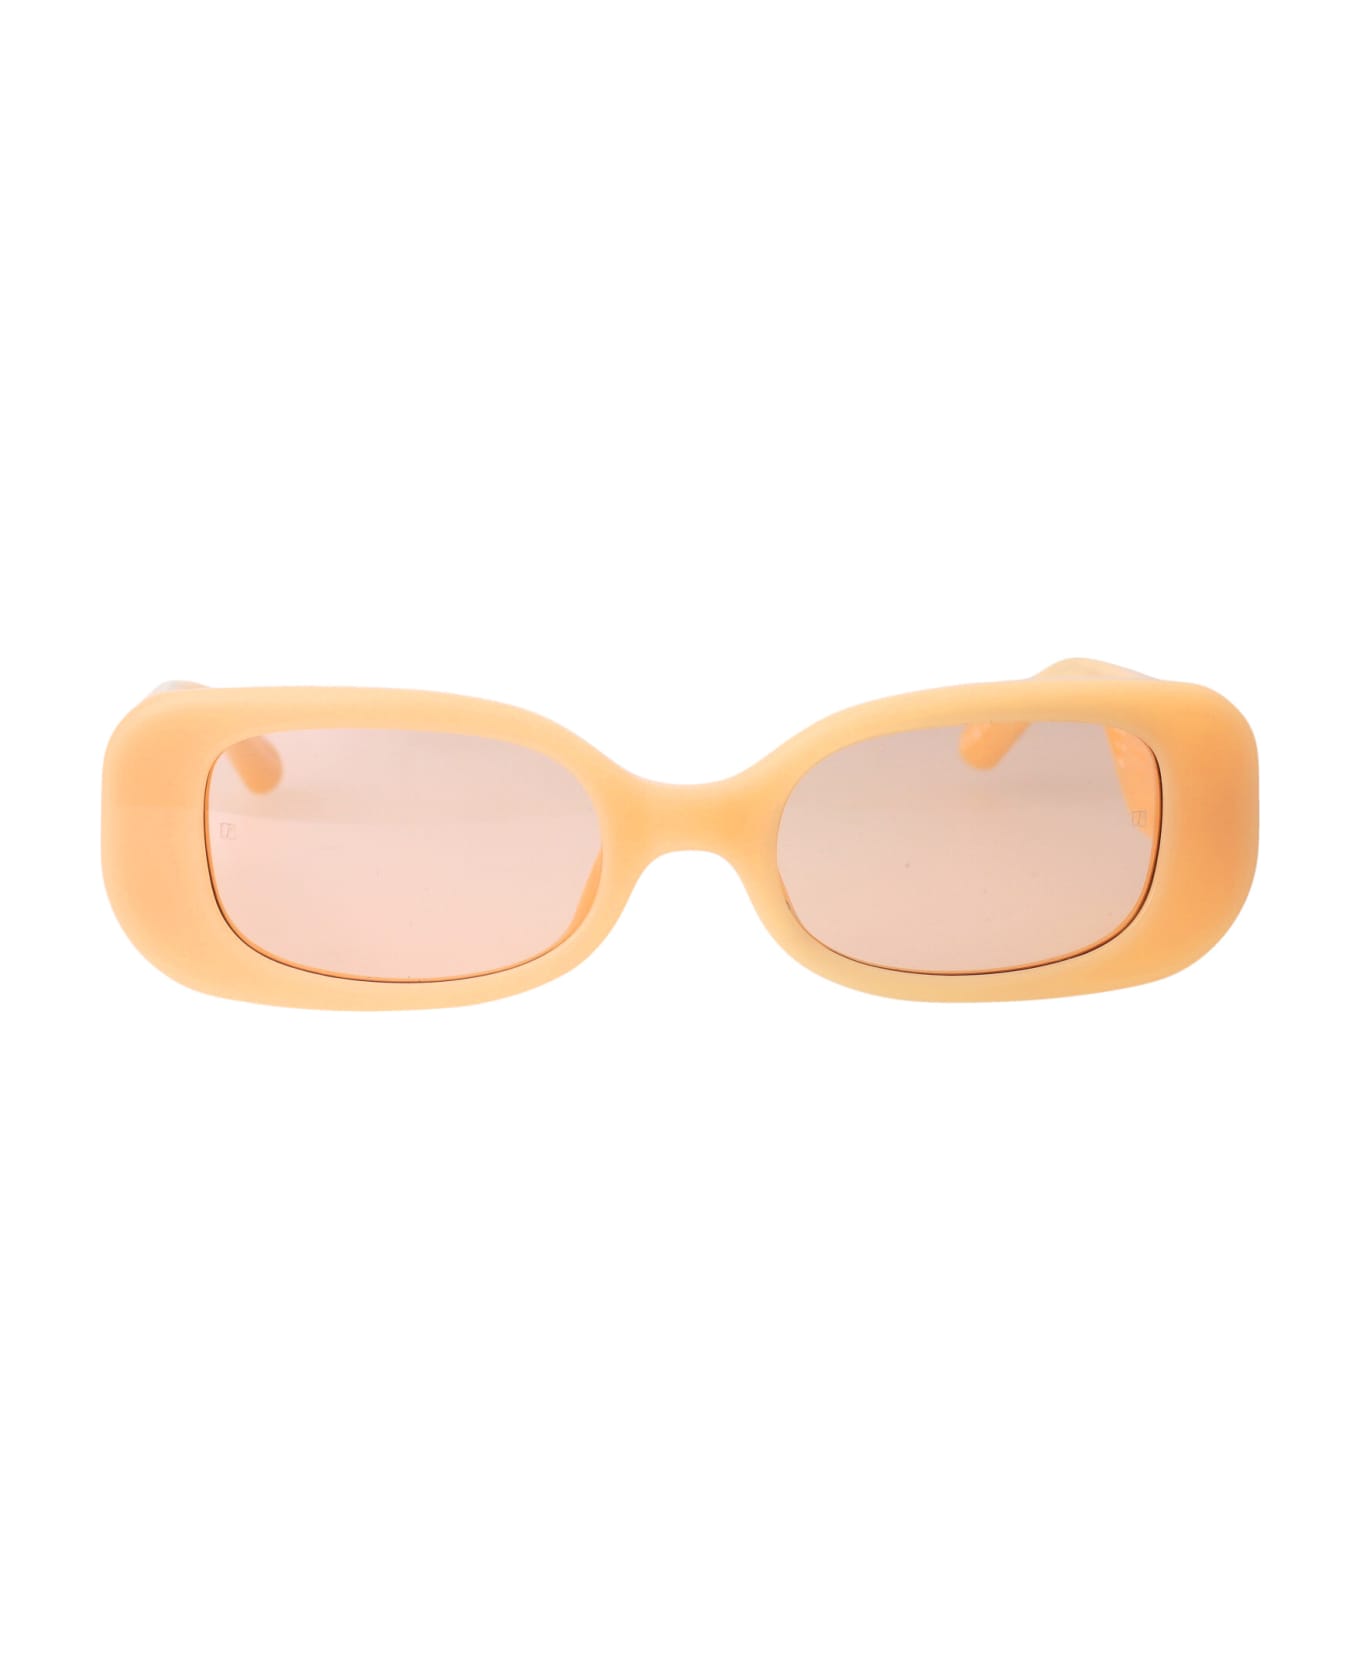 Linda Farrow Lola Sunglasses - PEACH/LIGHTGOLD/PEACH サングラス